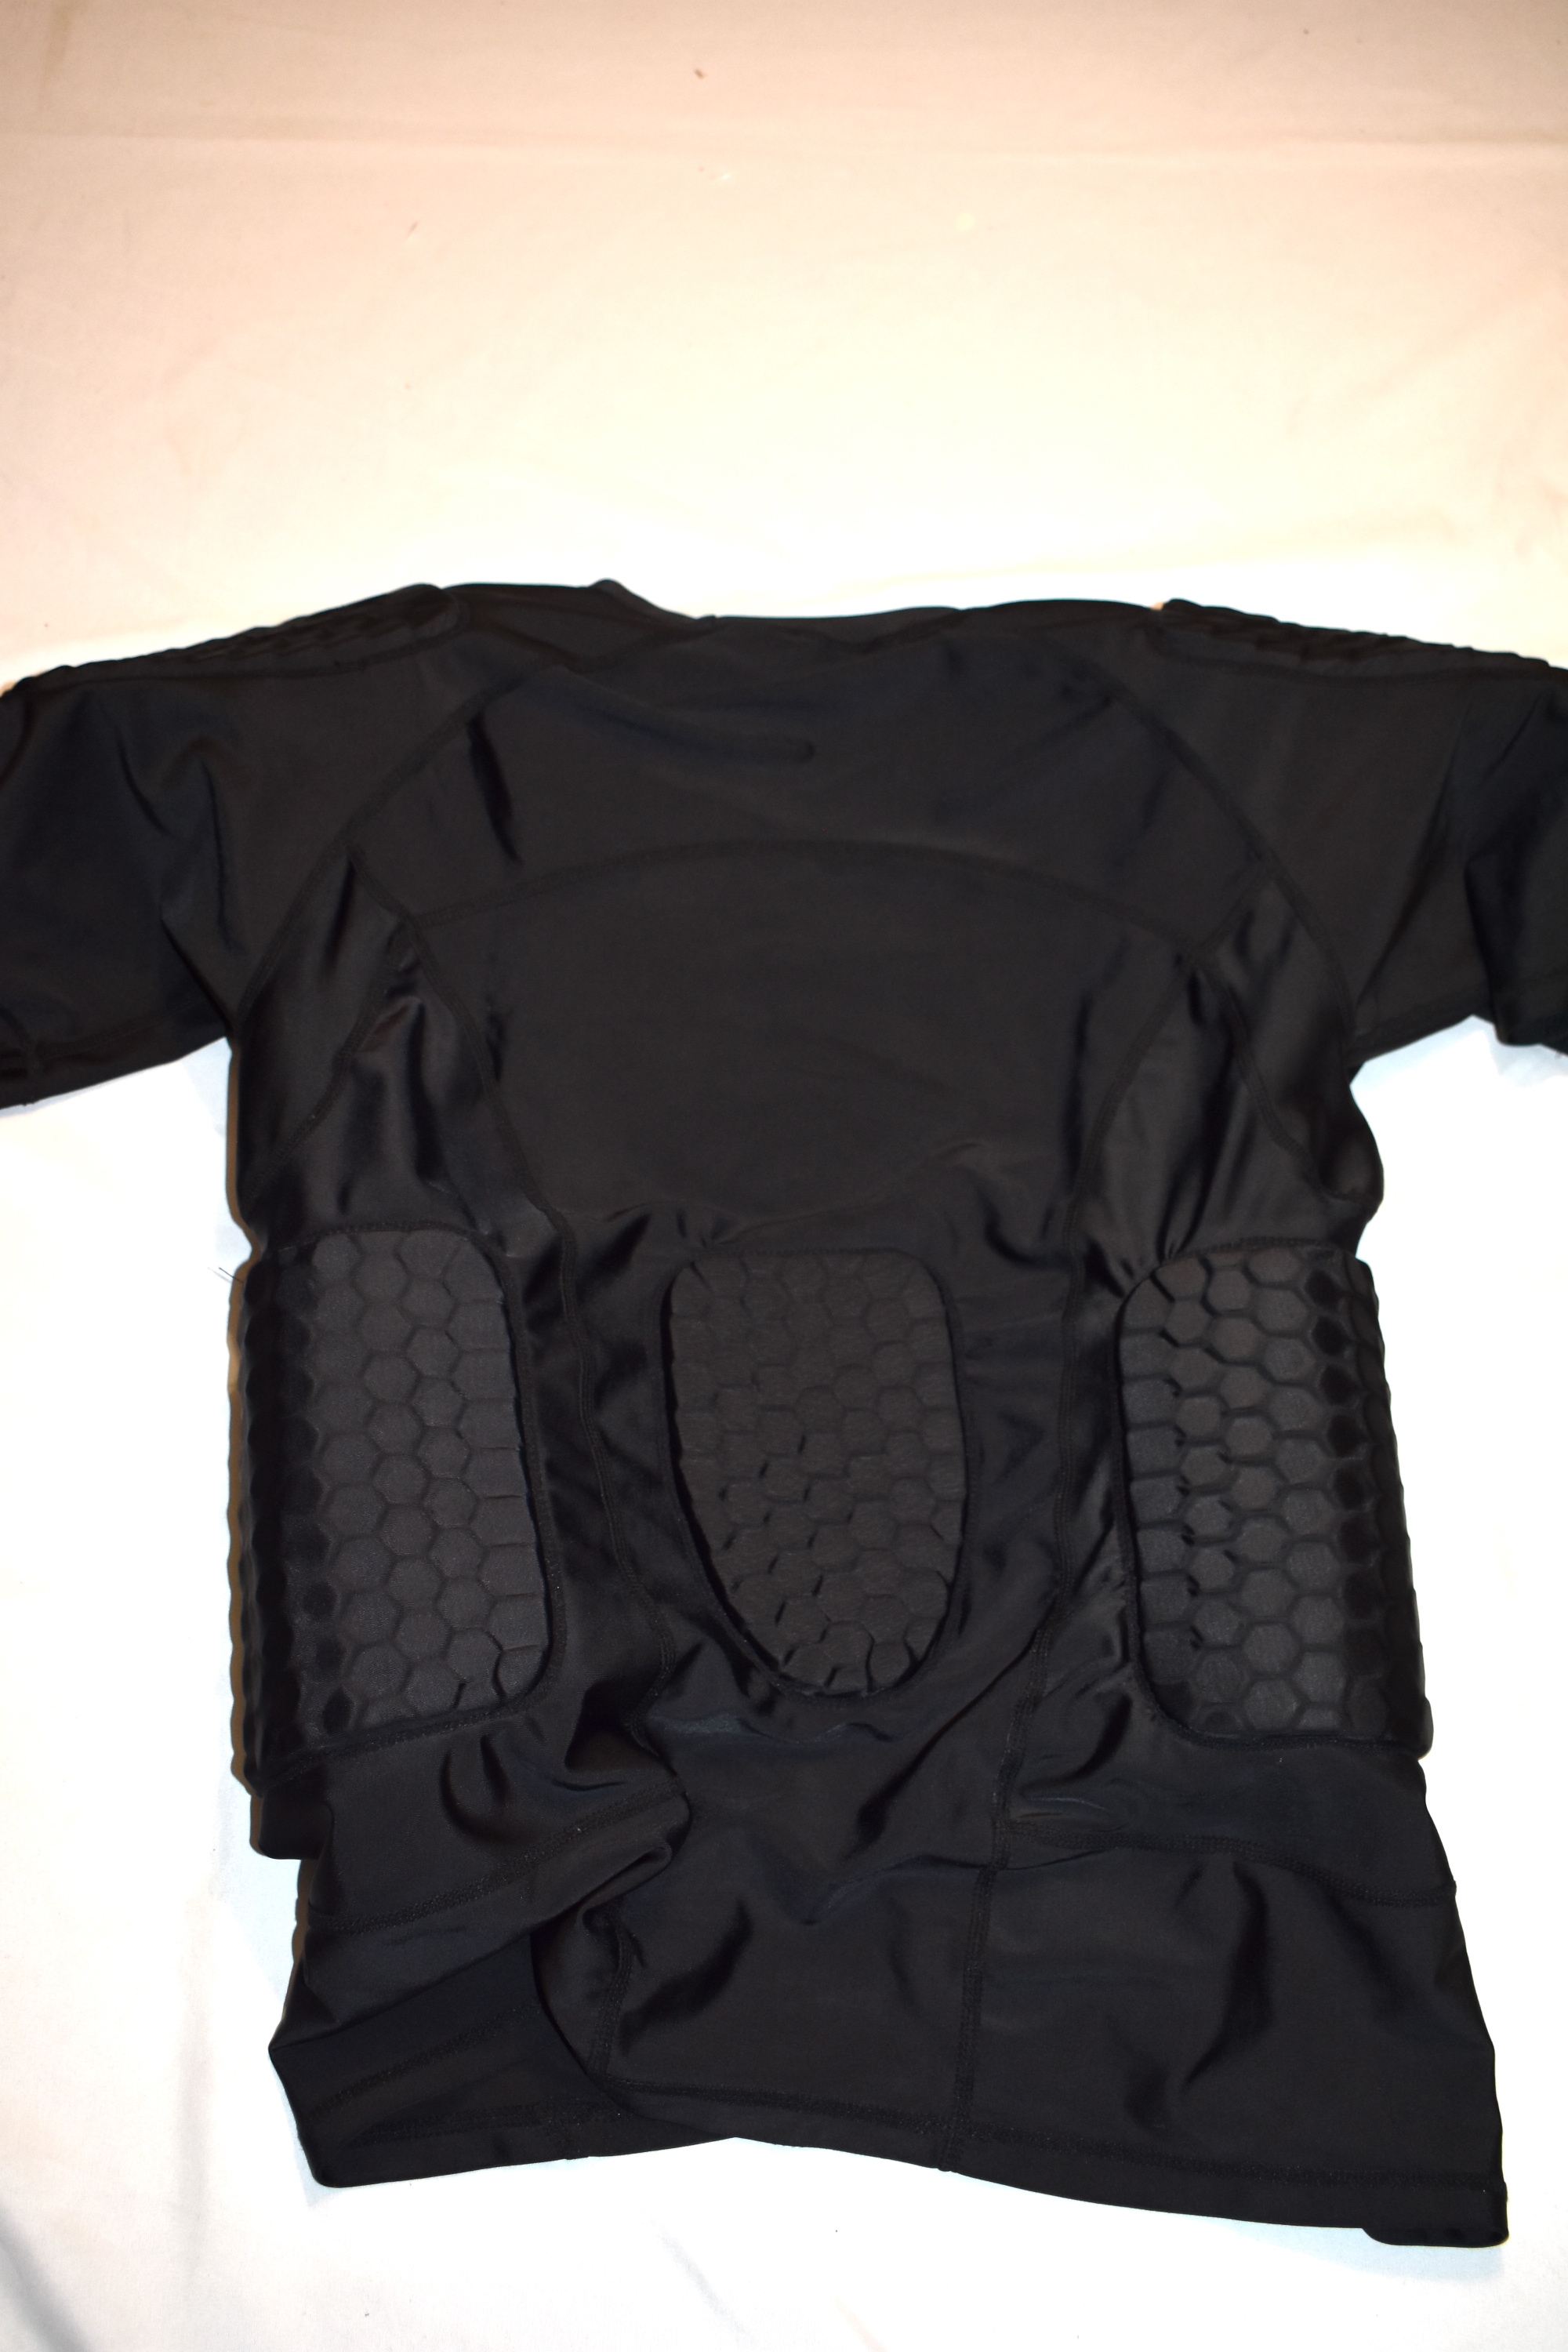 Black 4 Pad Compression Protective Shirt, Adult S/M